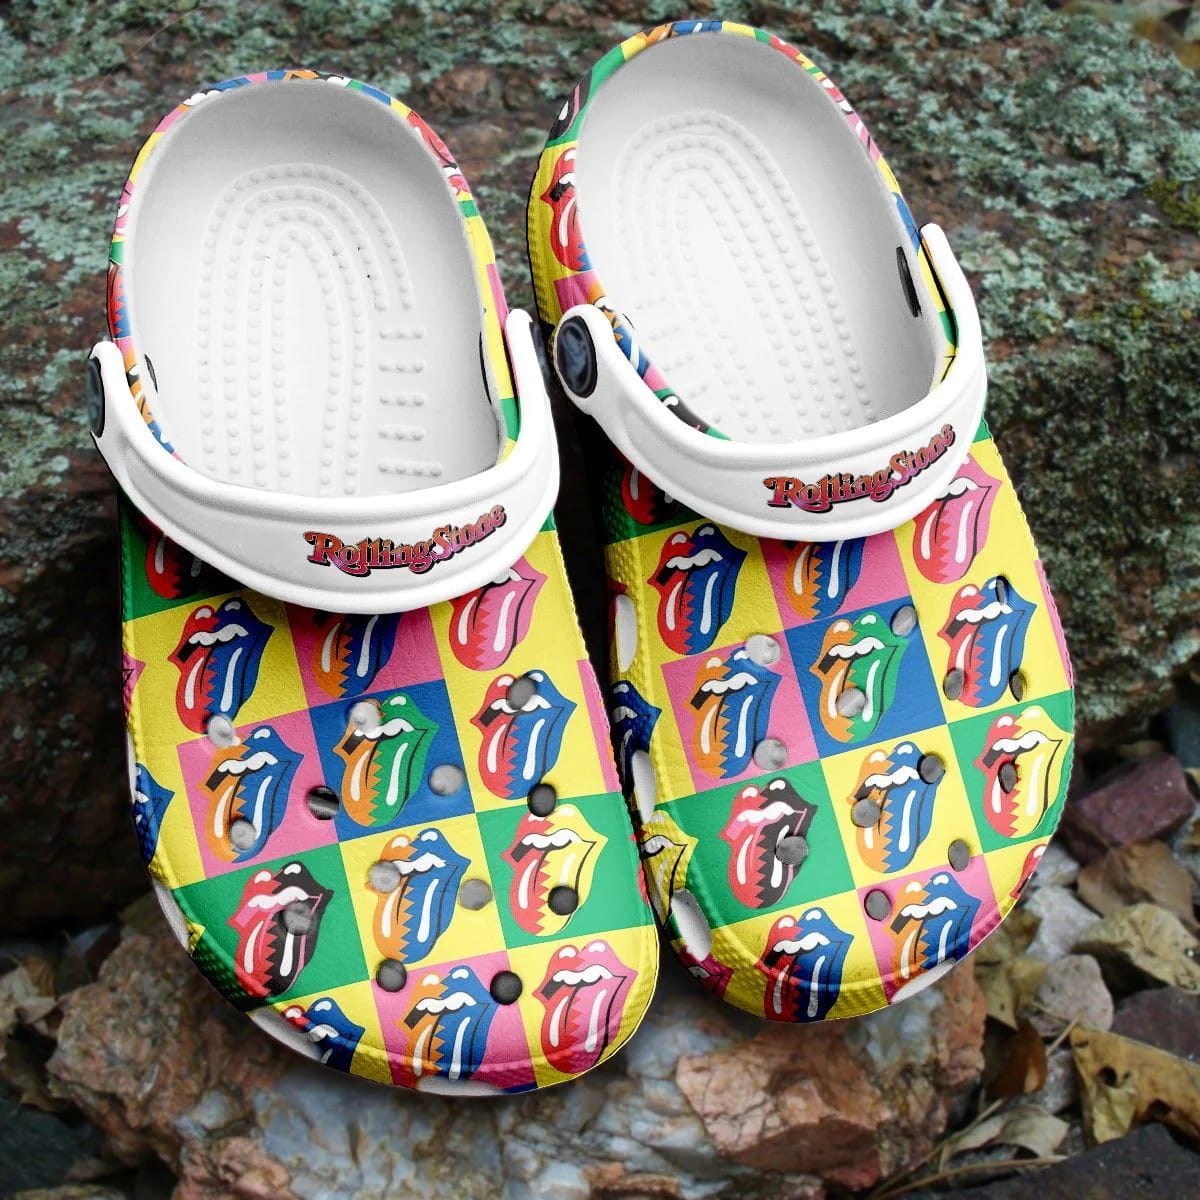 The Rollings Stones Rock Band Crocs Crocband Clogs Shoes Comfortable For Men Women Z3bkp3